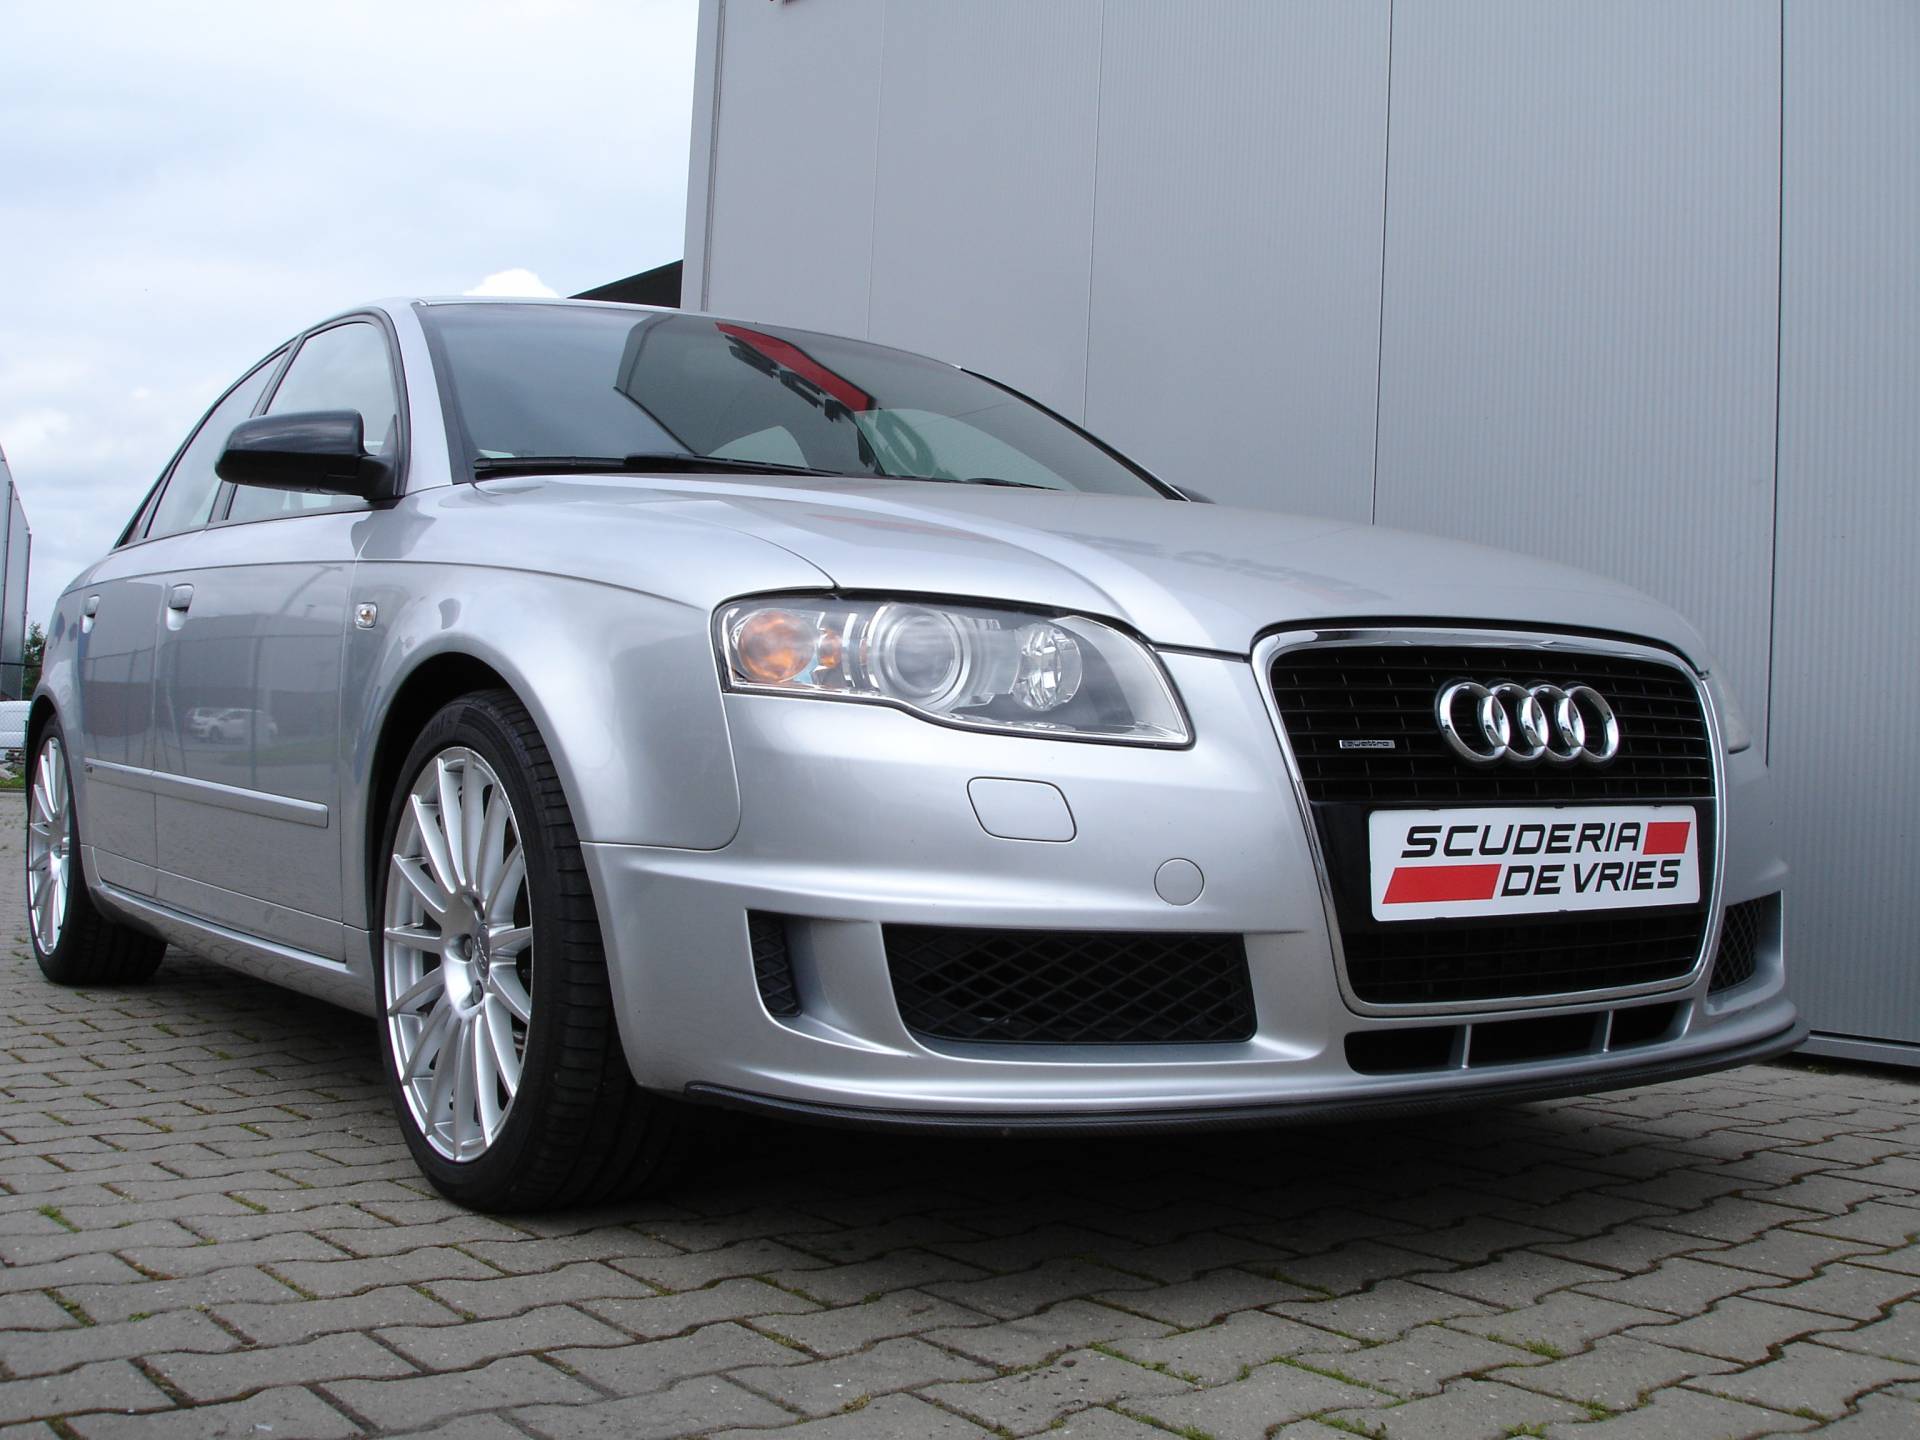 Plasticiteit onwettig verlichten For Sale: Audi A4 2.0 TFSI DTM (2006) offered for GBP 20,775